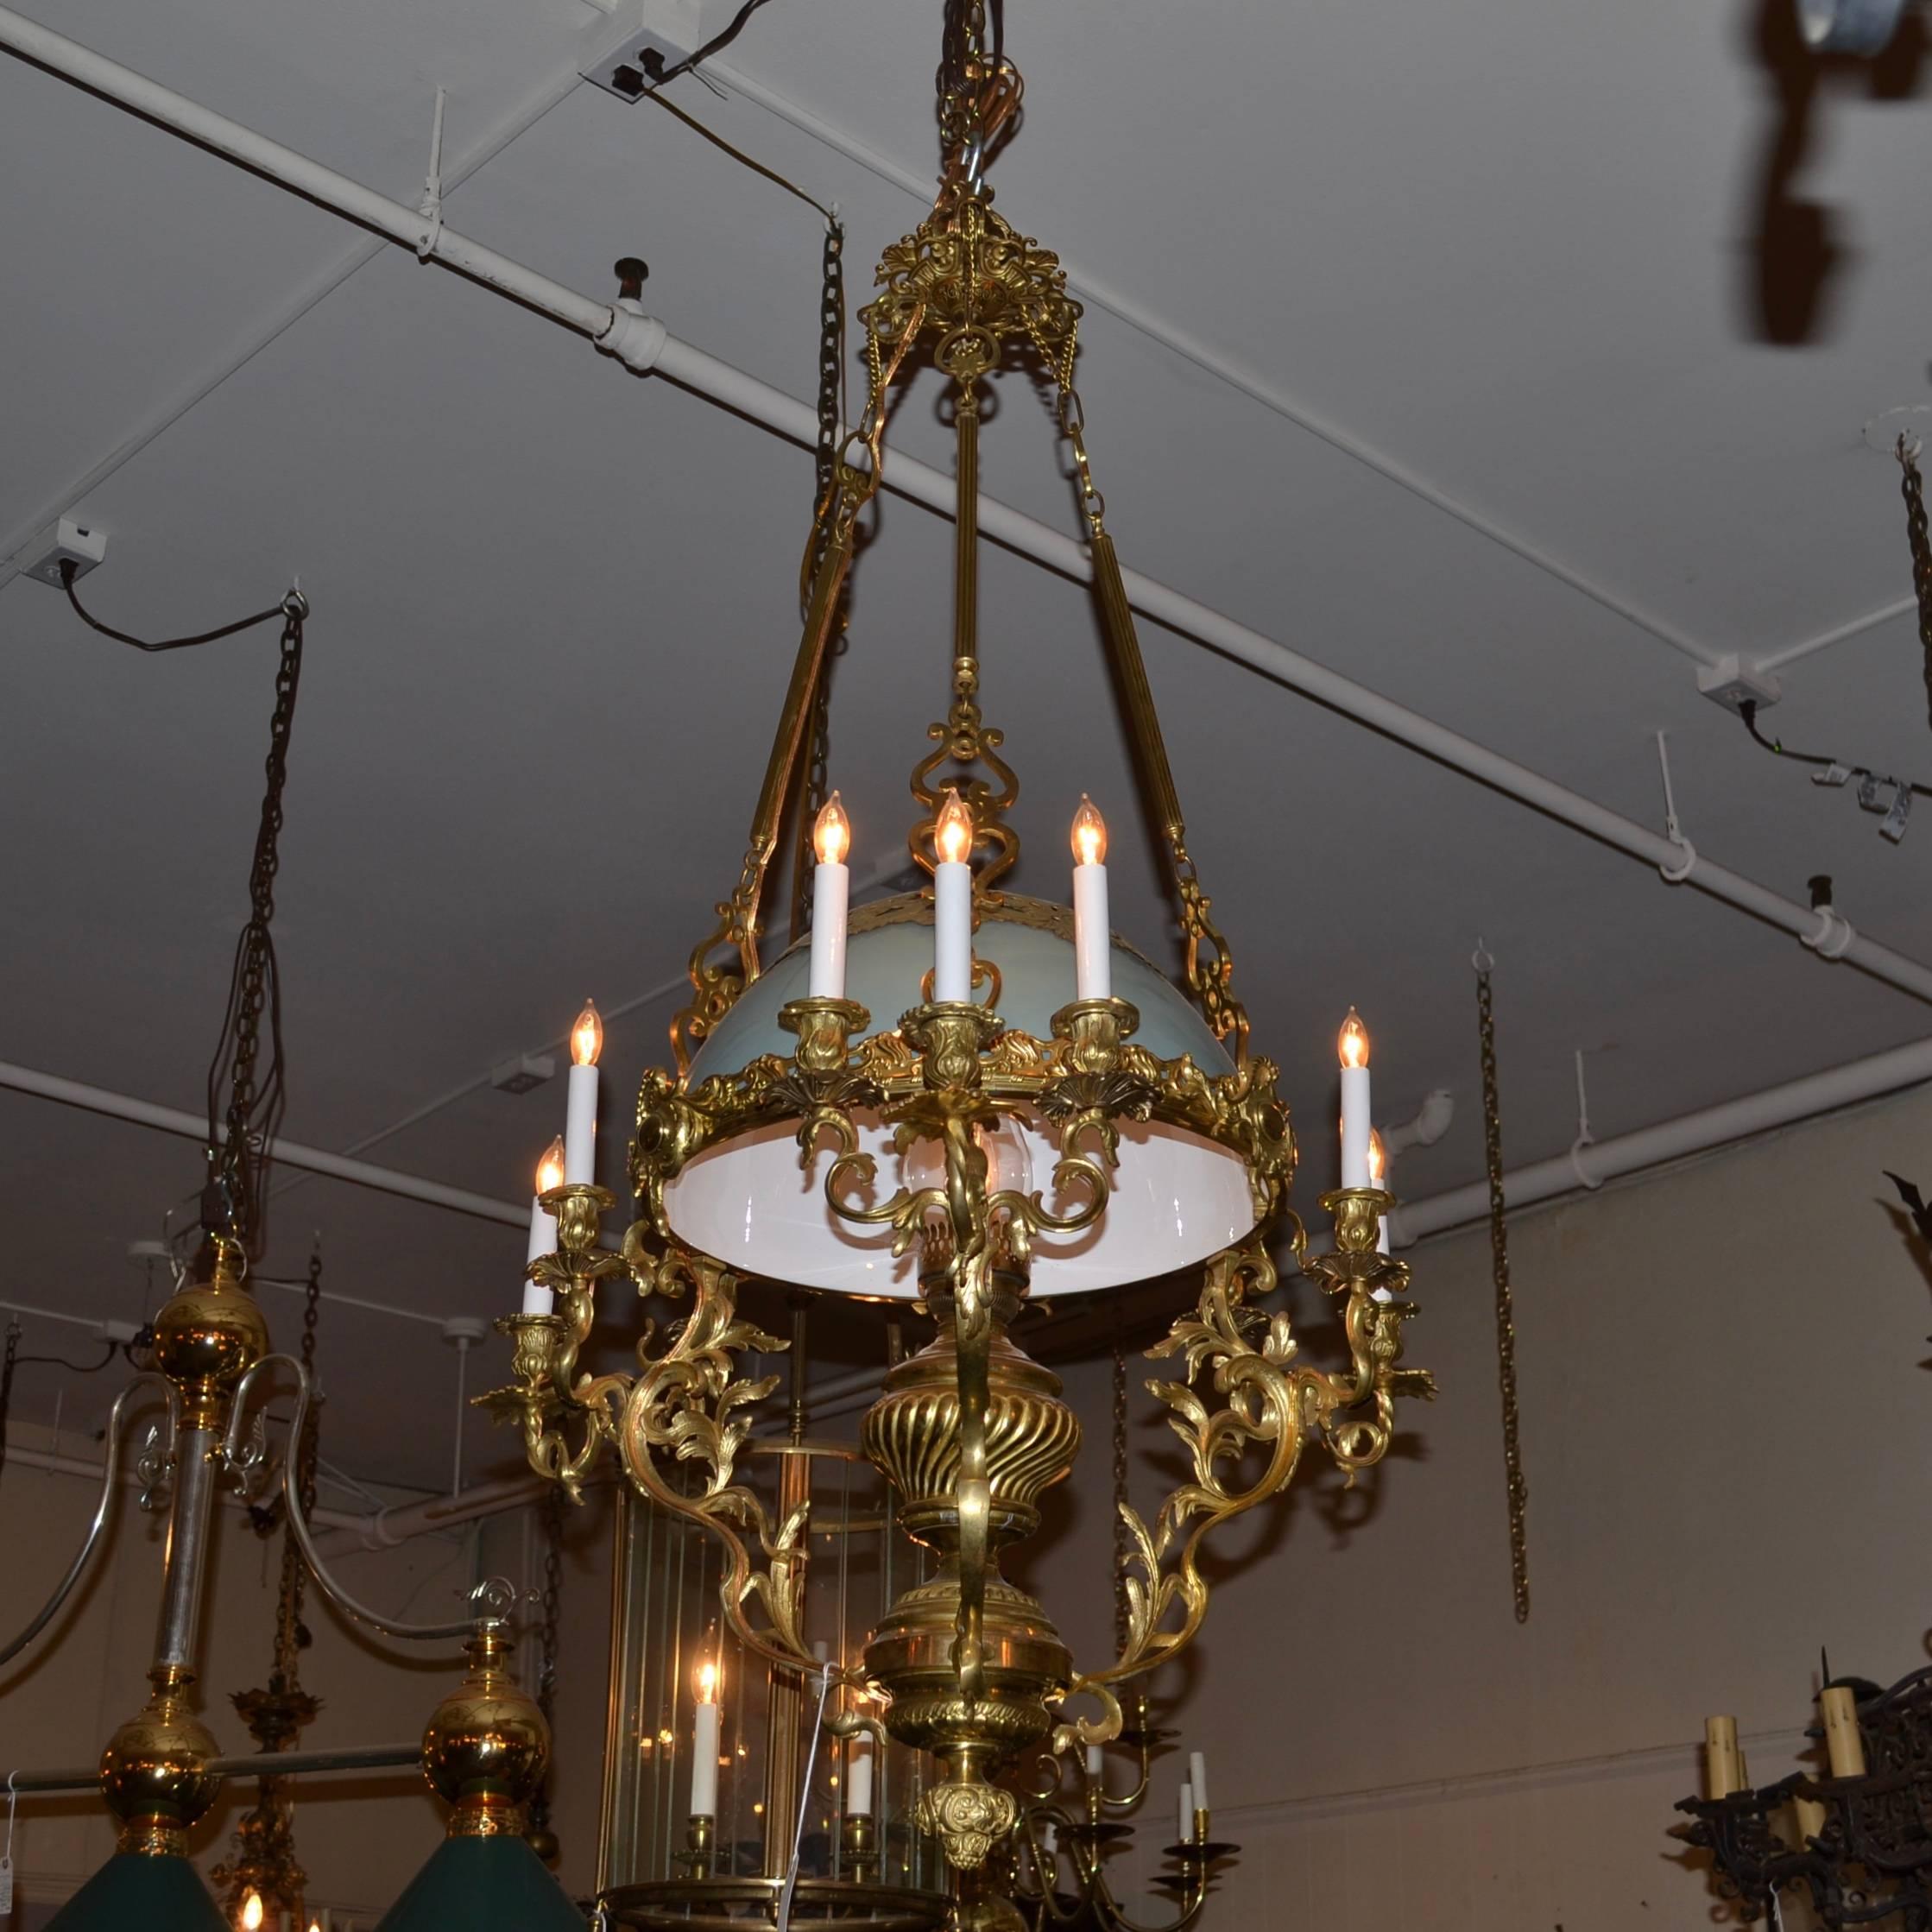 All original antique brass suspension oil lantern, circa 19th century.